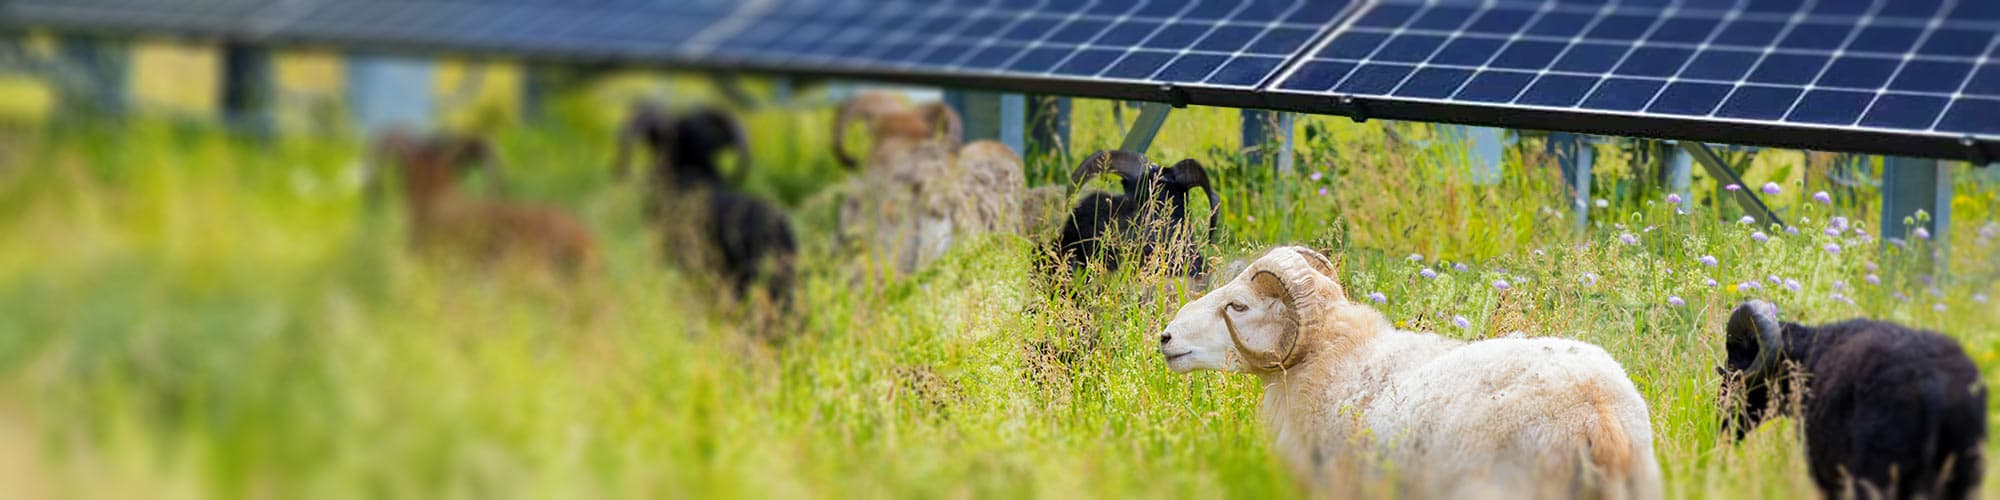 Sheep grazing around the solar panels